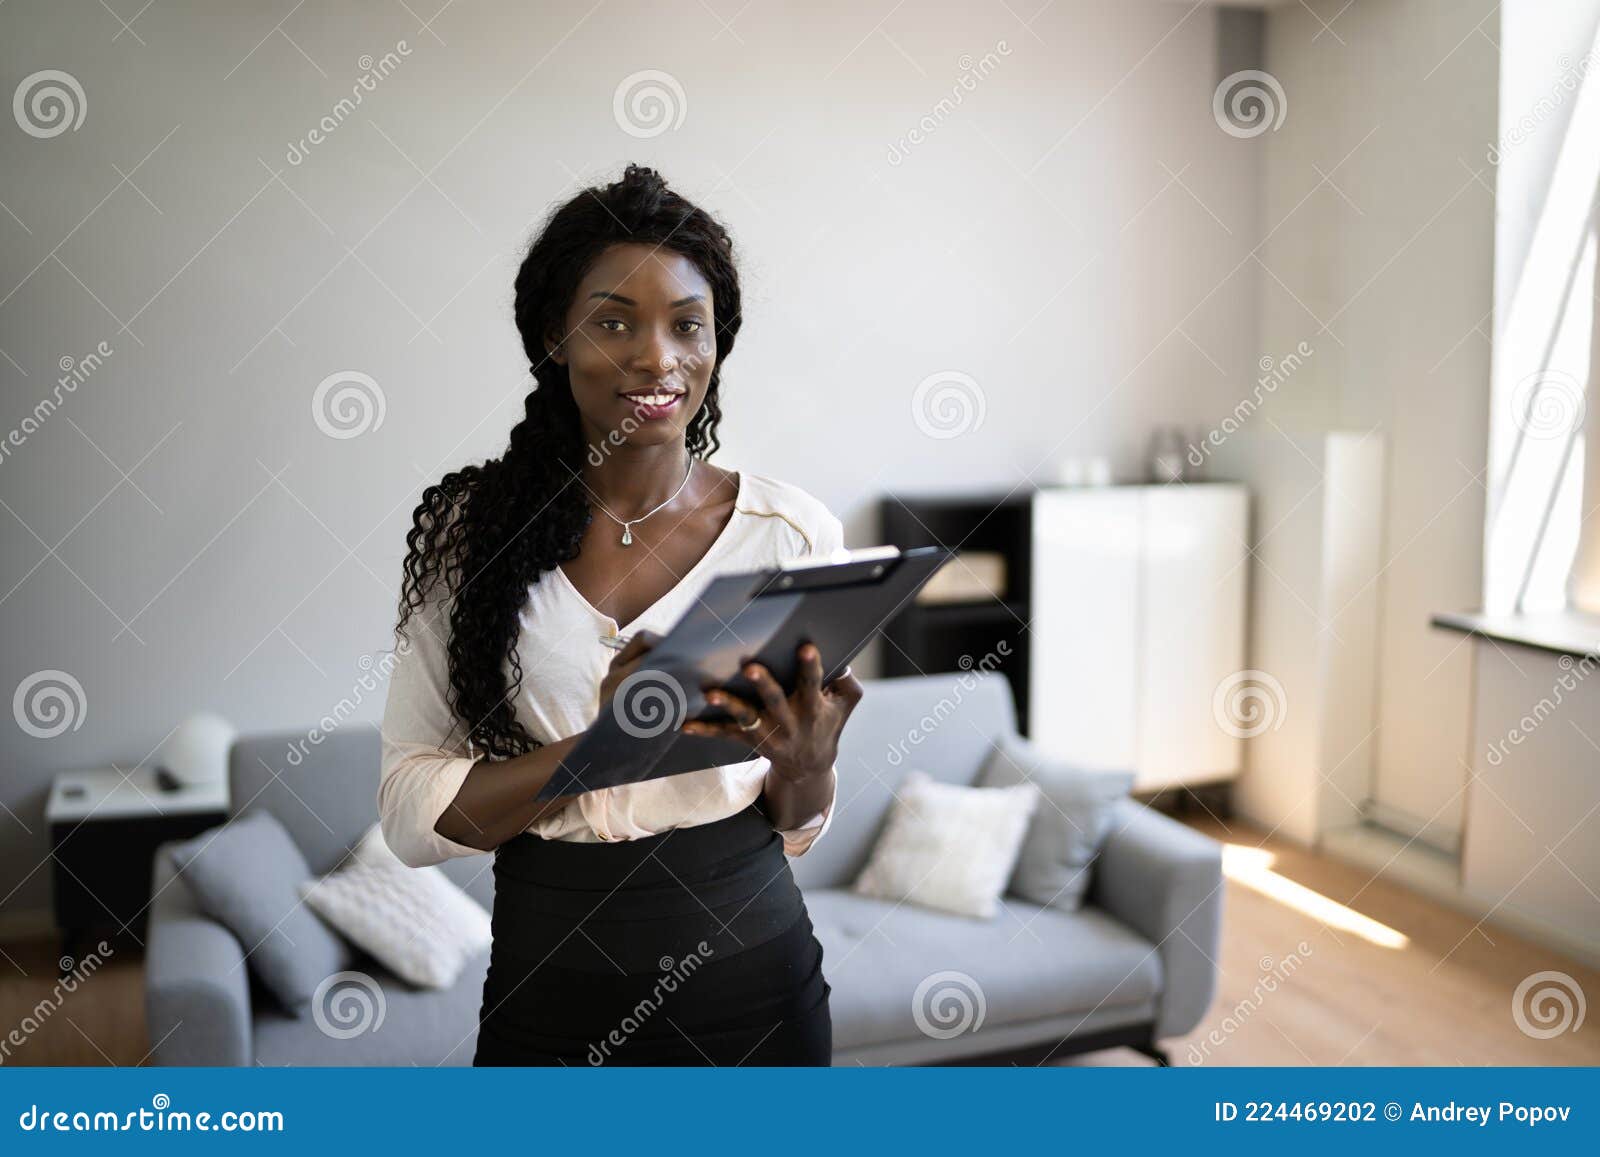 african woman real estate loan appraiser